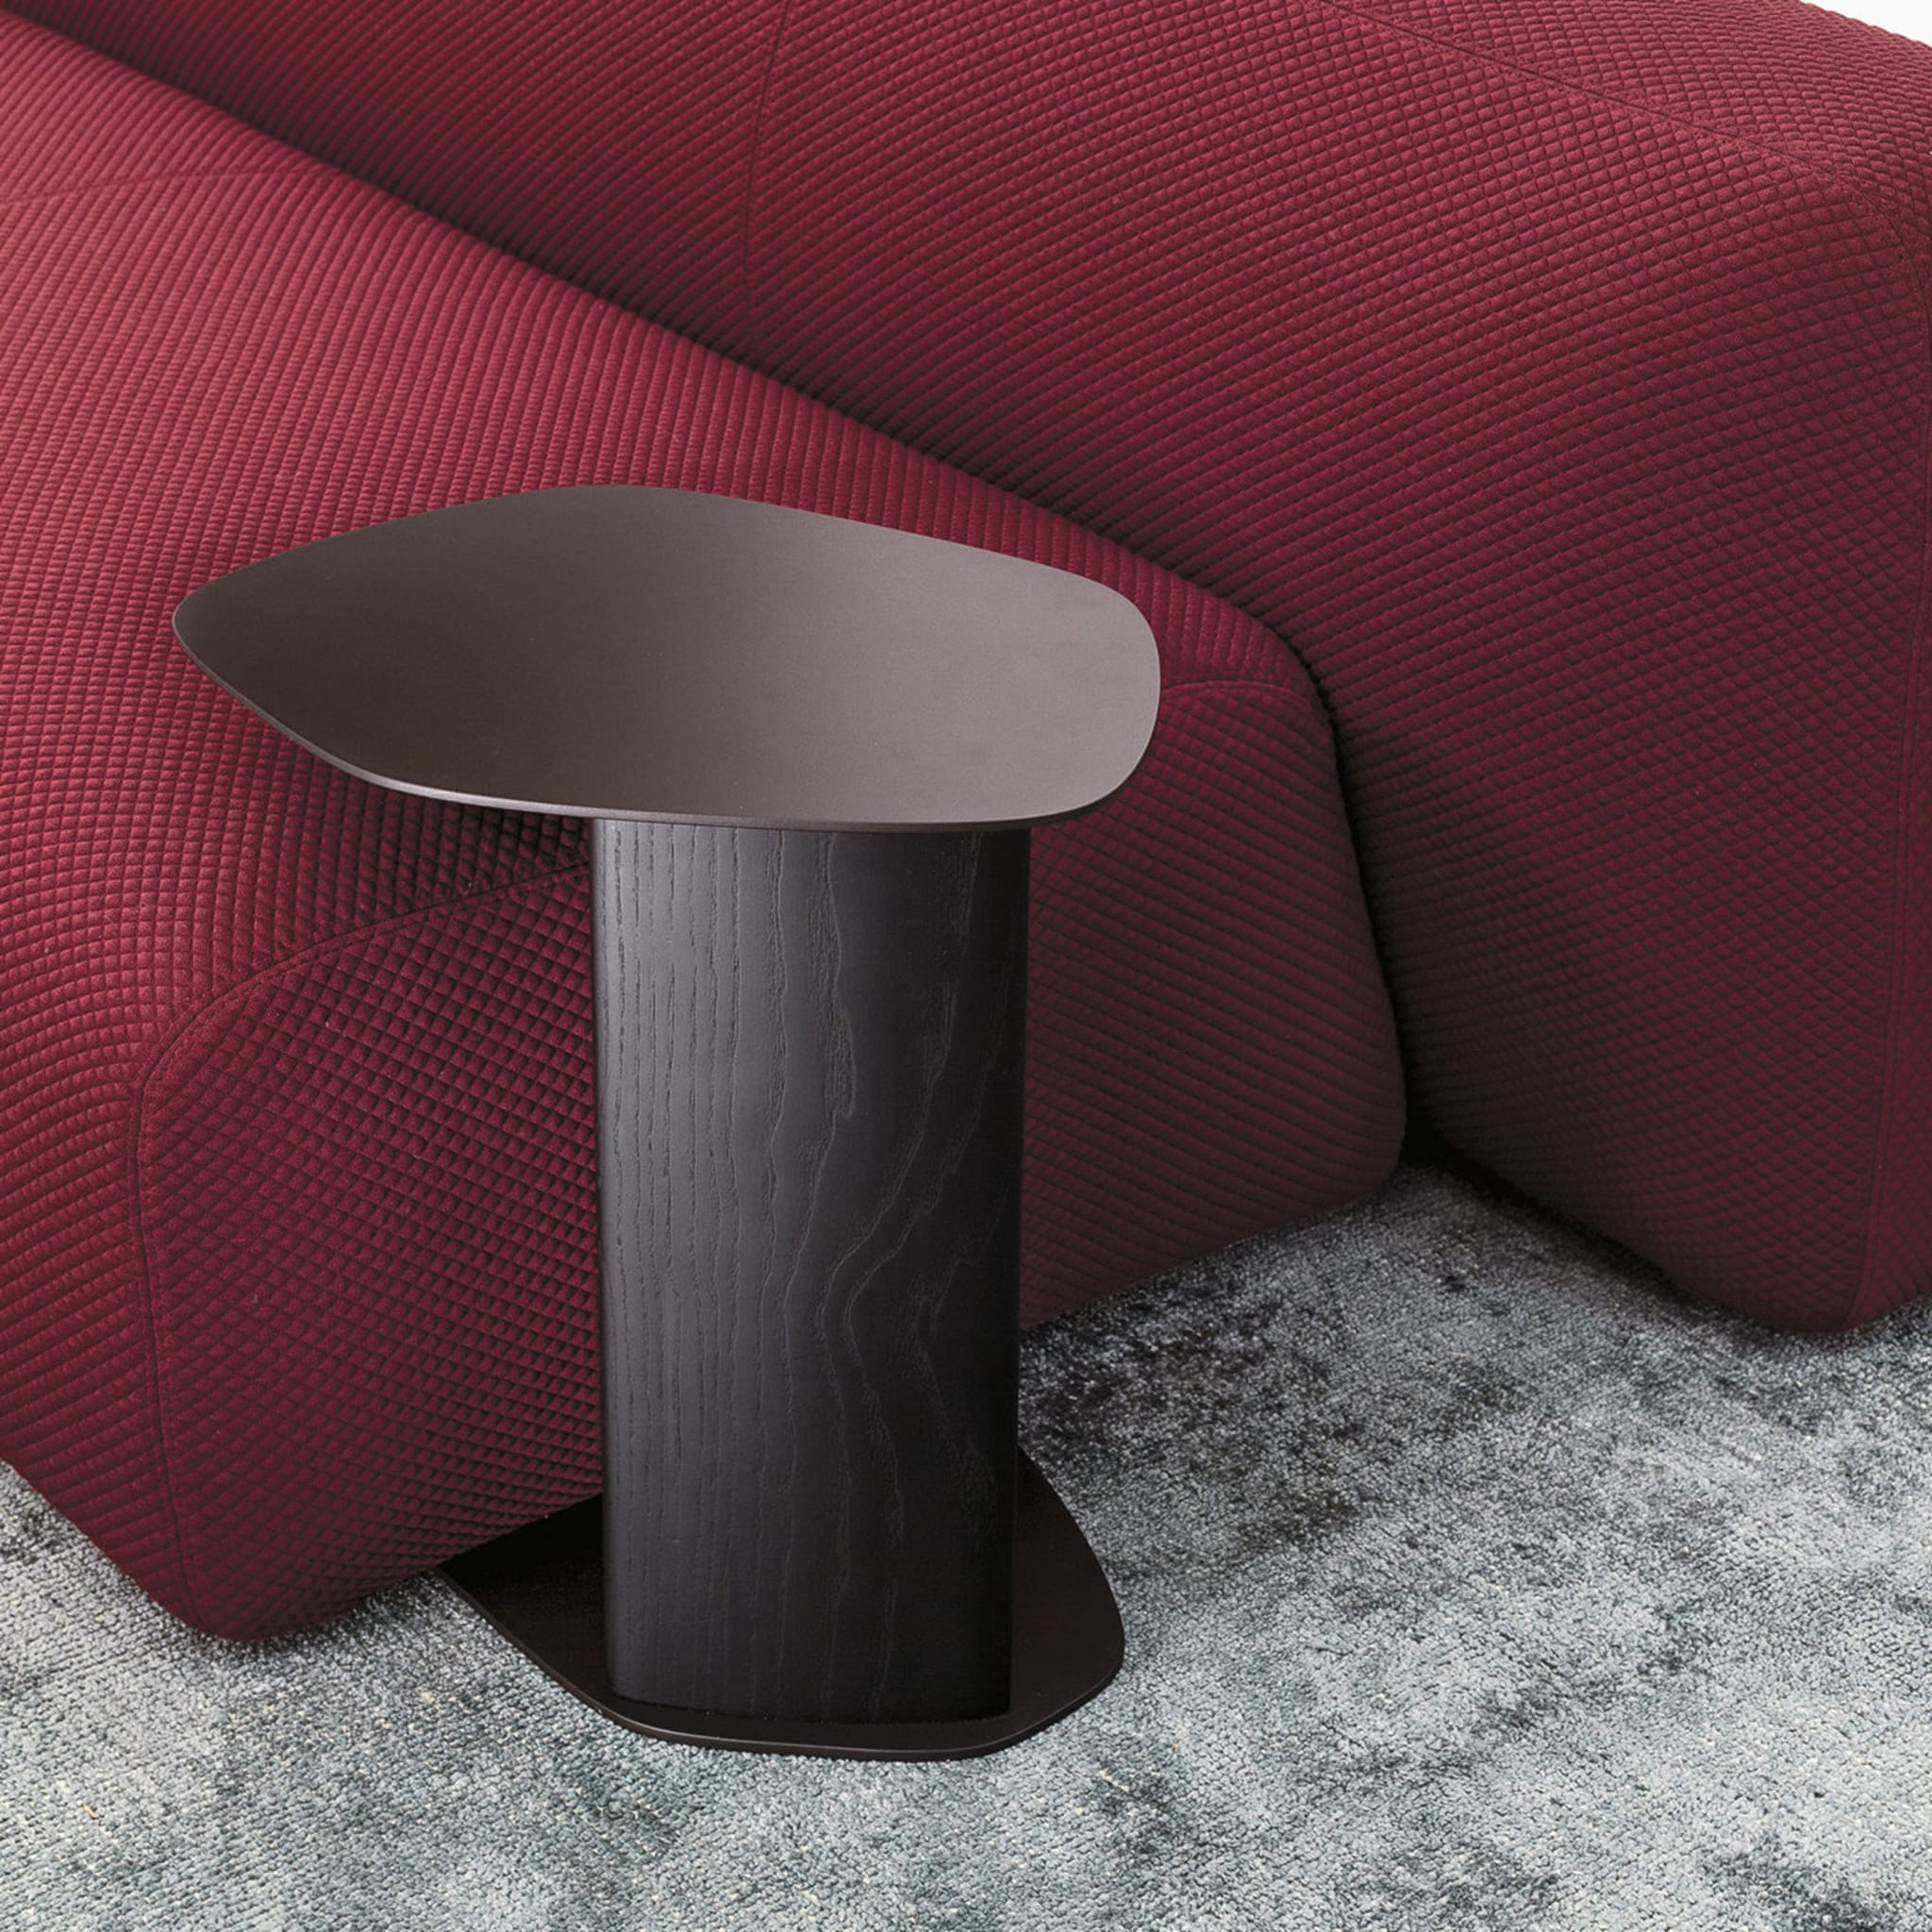 Keisho Modern Black Ash Wood Side Table for Living Room - Alternative view 1